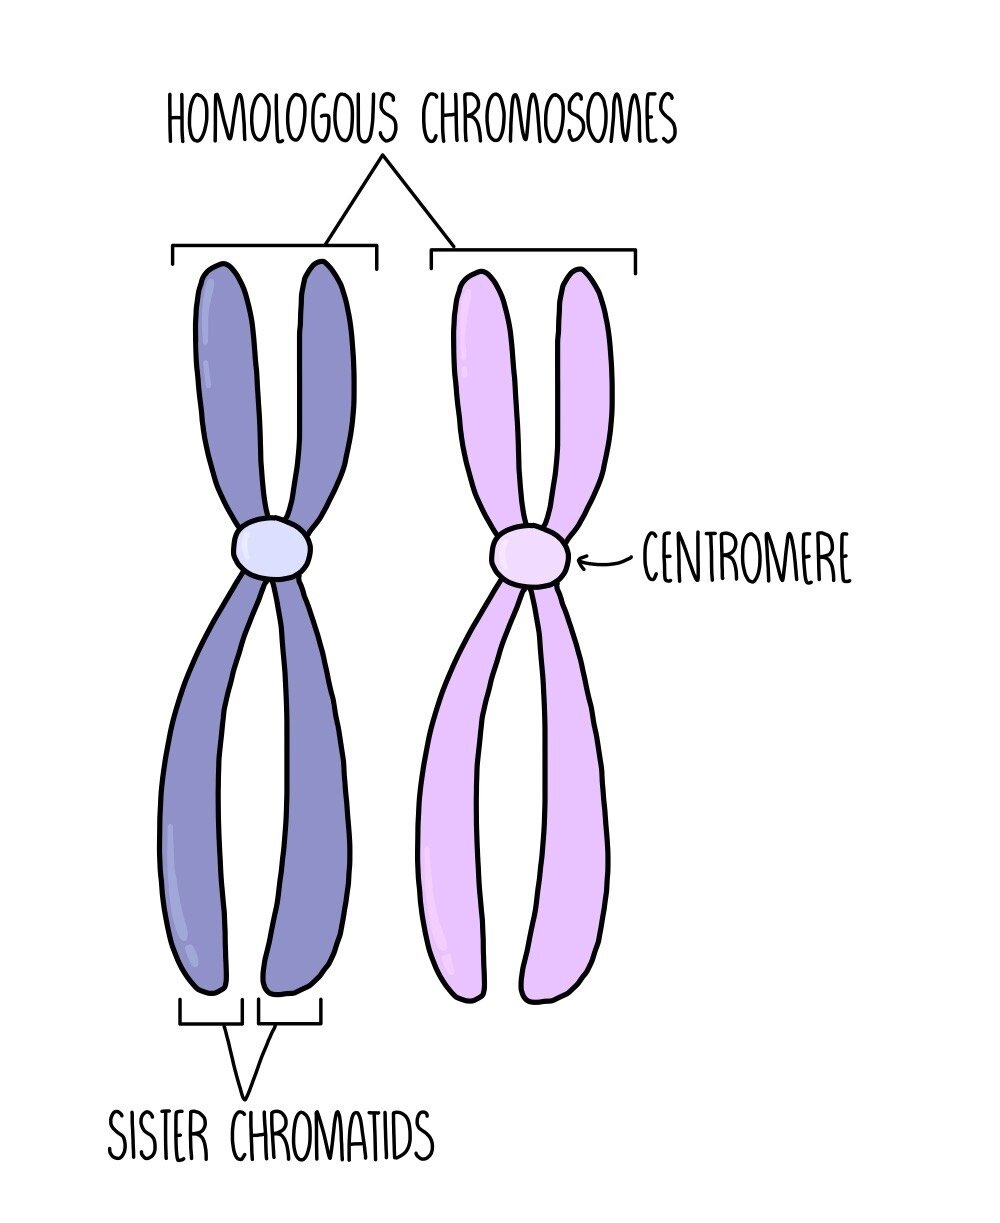 daughter chromosomes